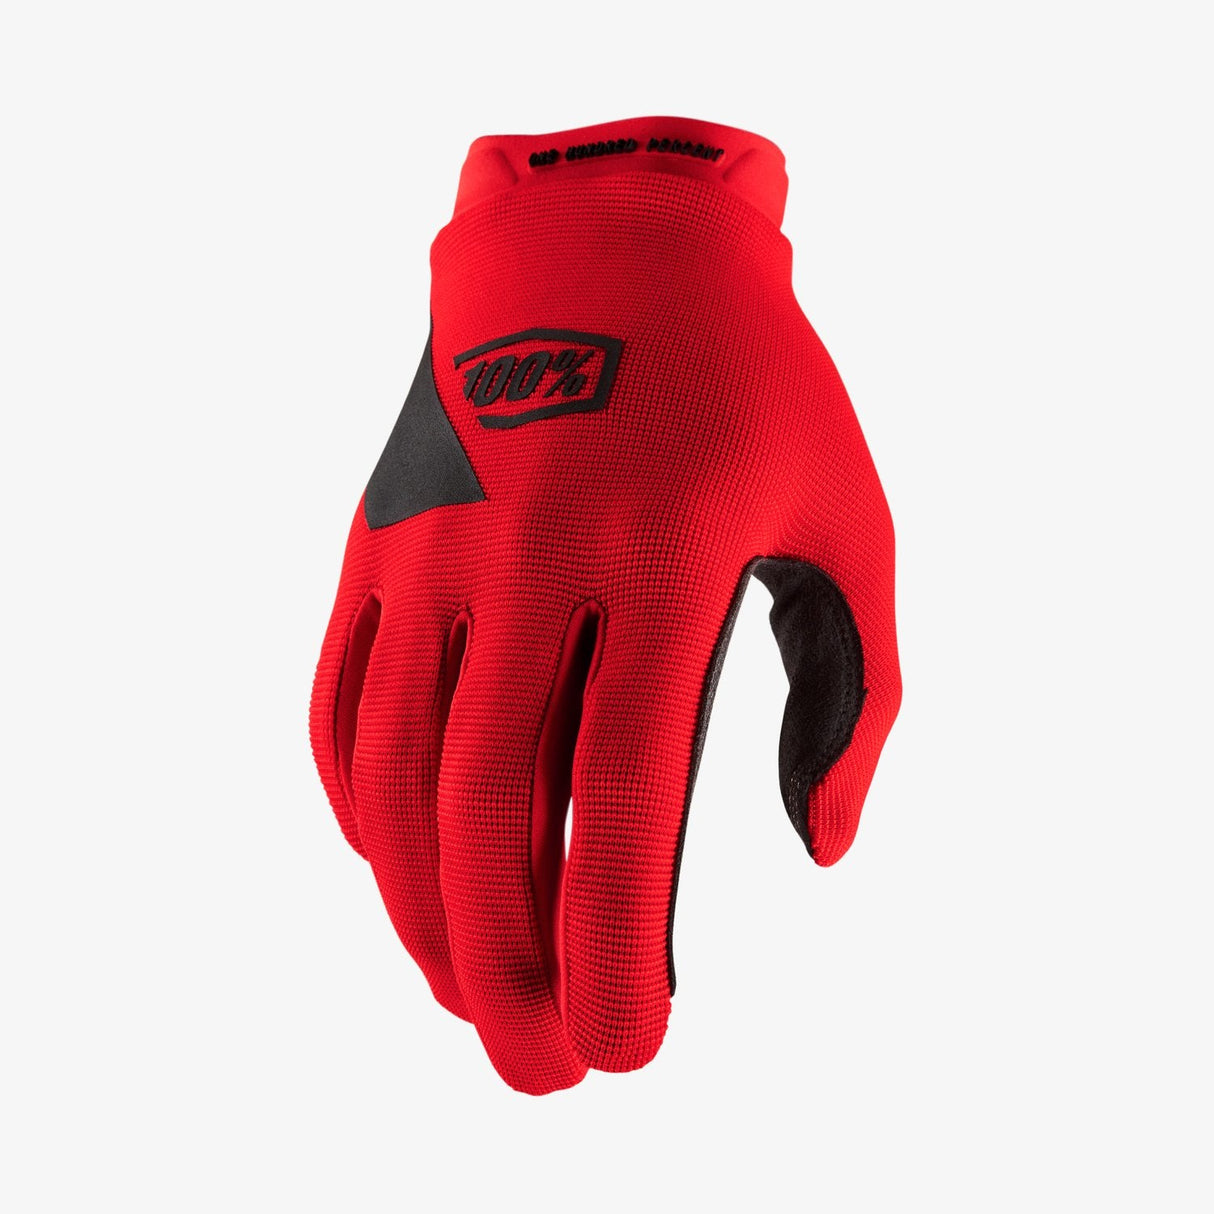 Ride 100% RIDECAMP Mountain Bike Full Finger Glove Red - XL Misc Full Catalog Ride 100%